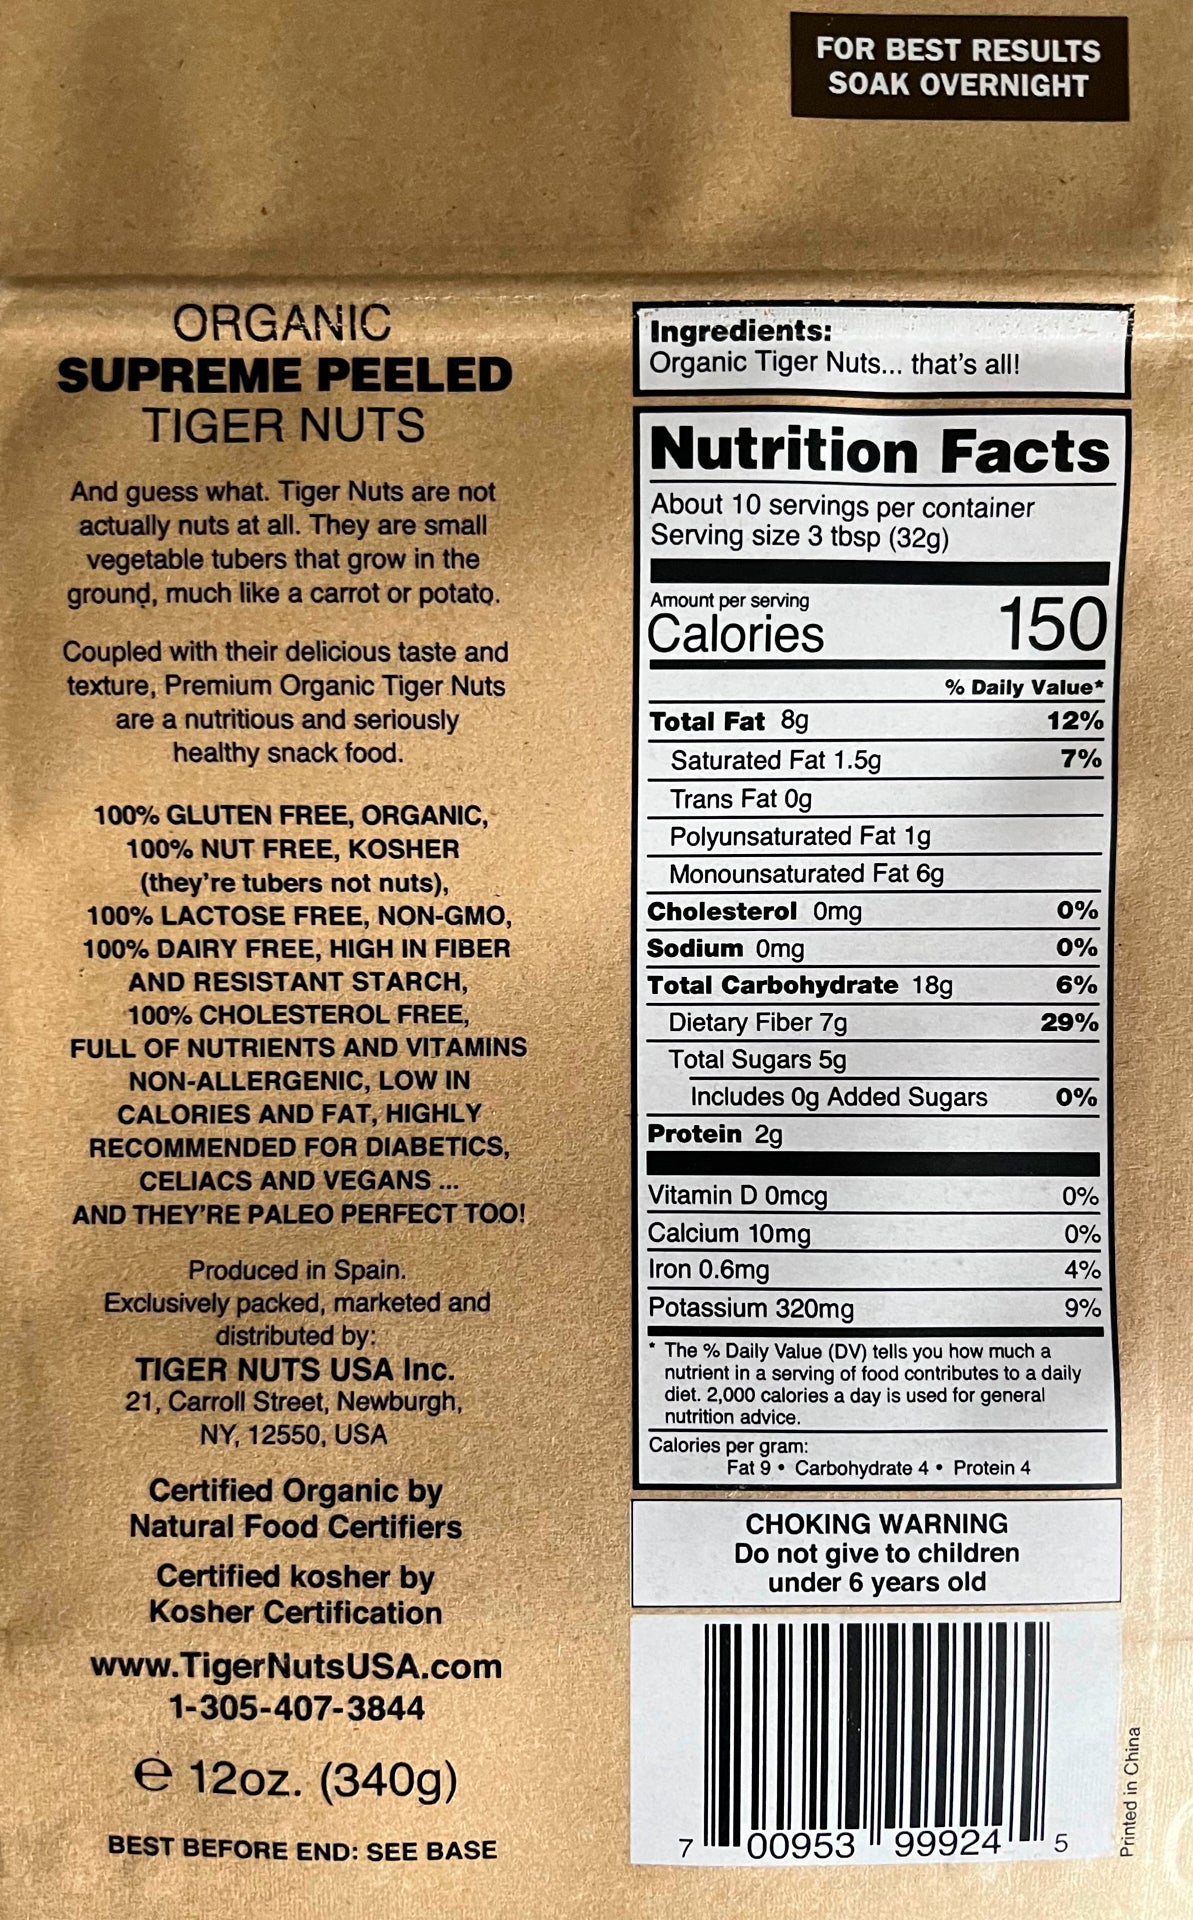 Supreme Peeled Tiger Nuts in 12 oz bag